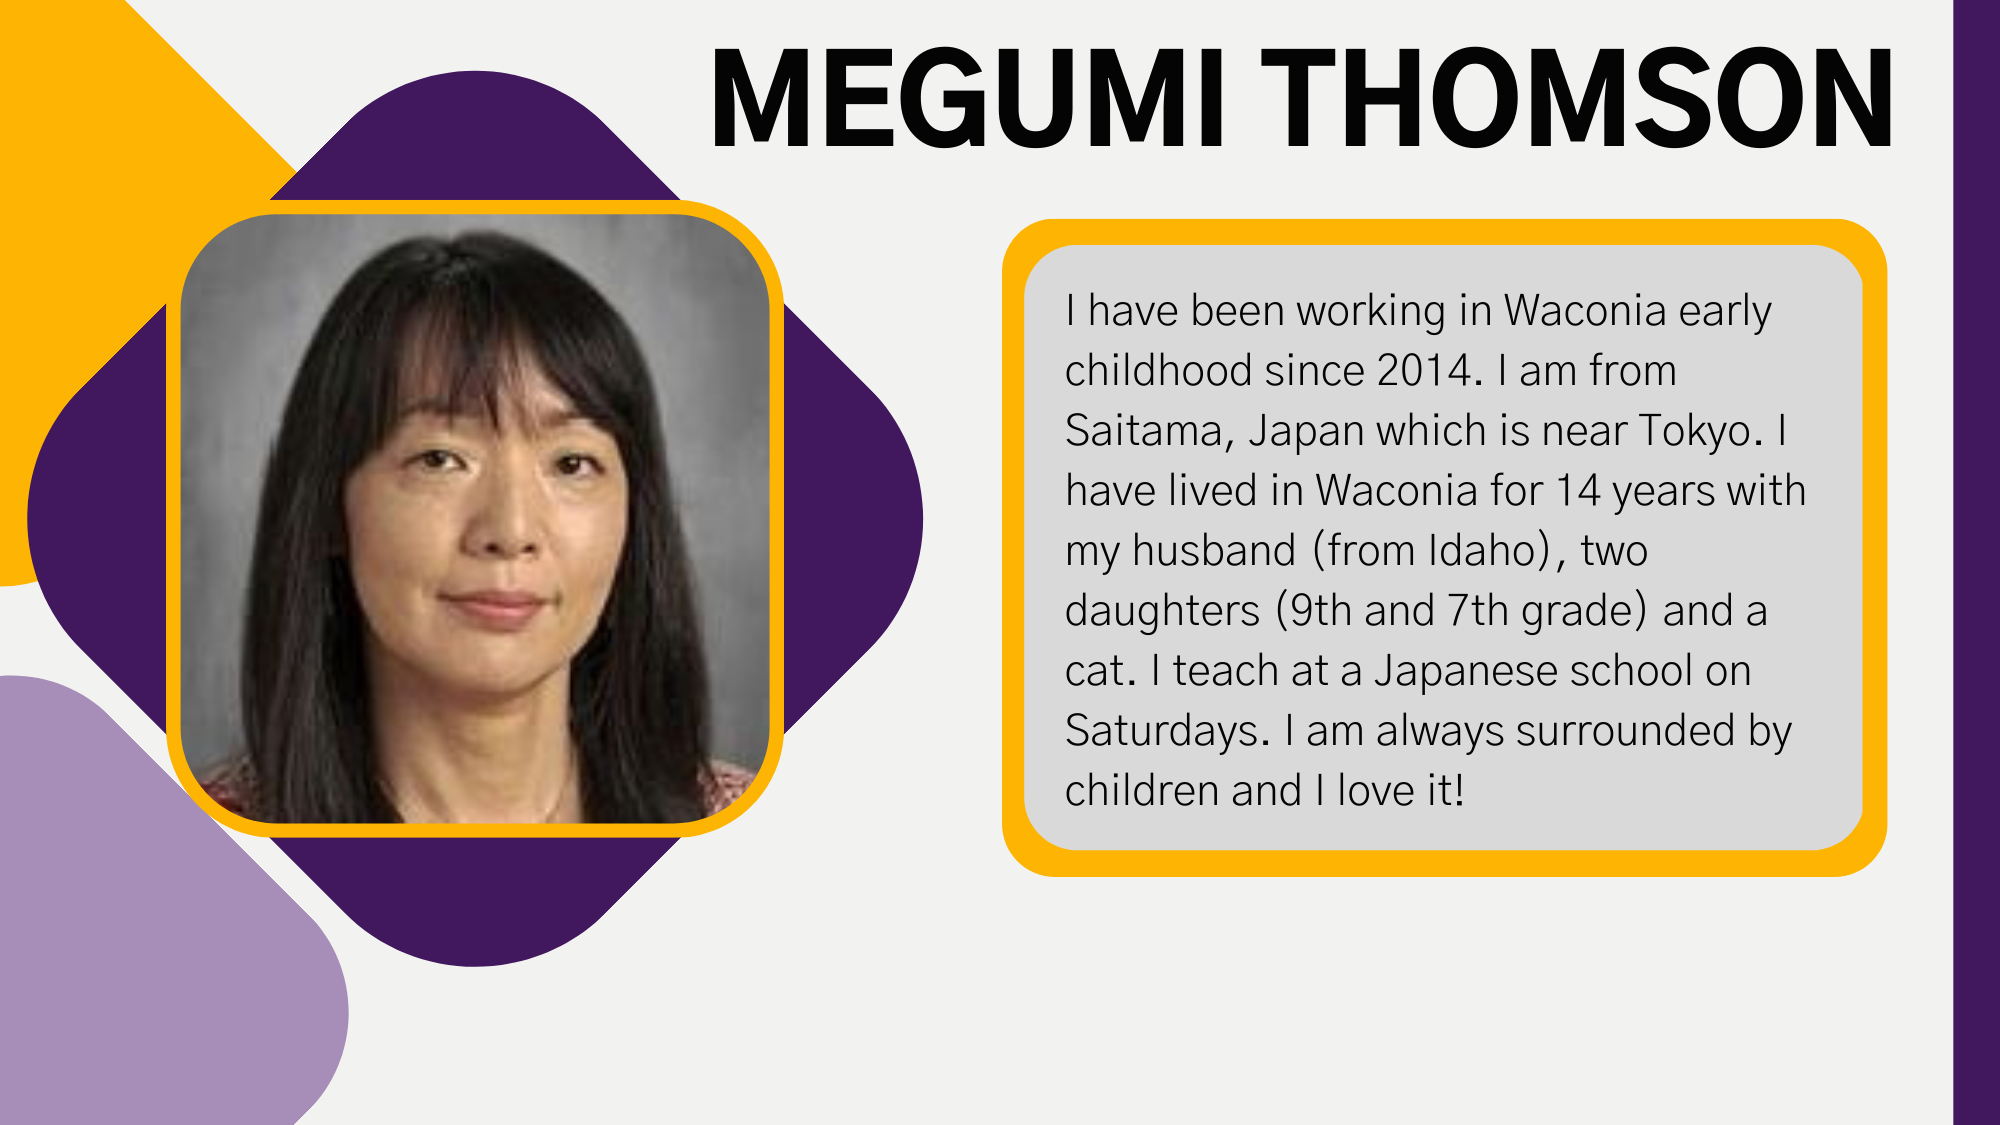 Megumi Thomson